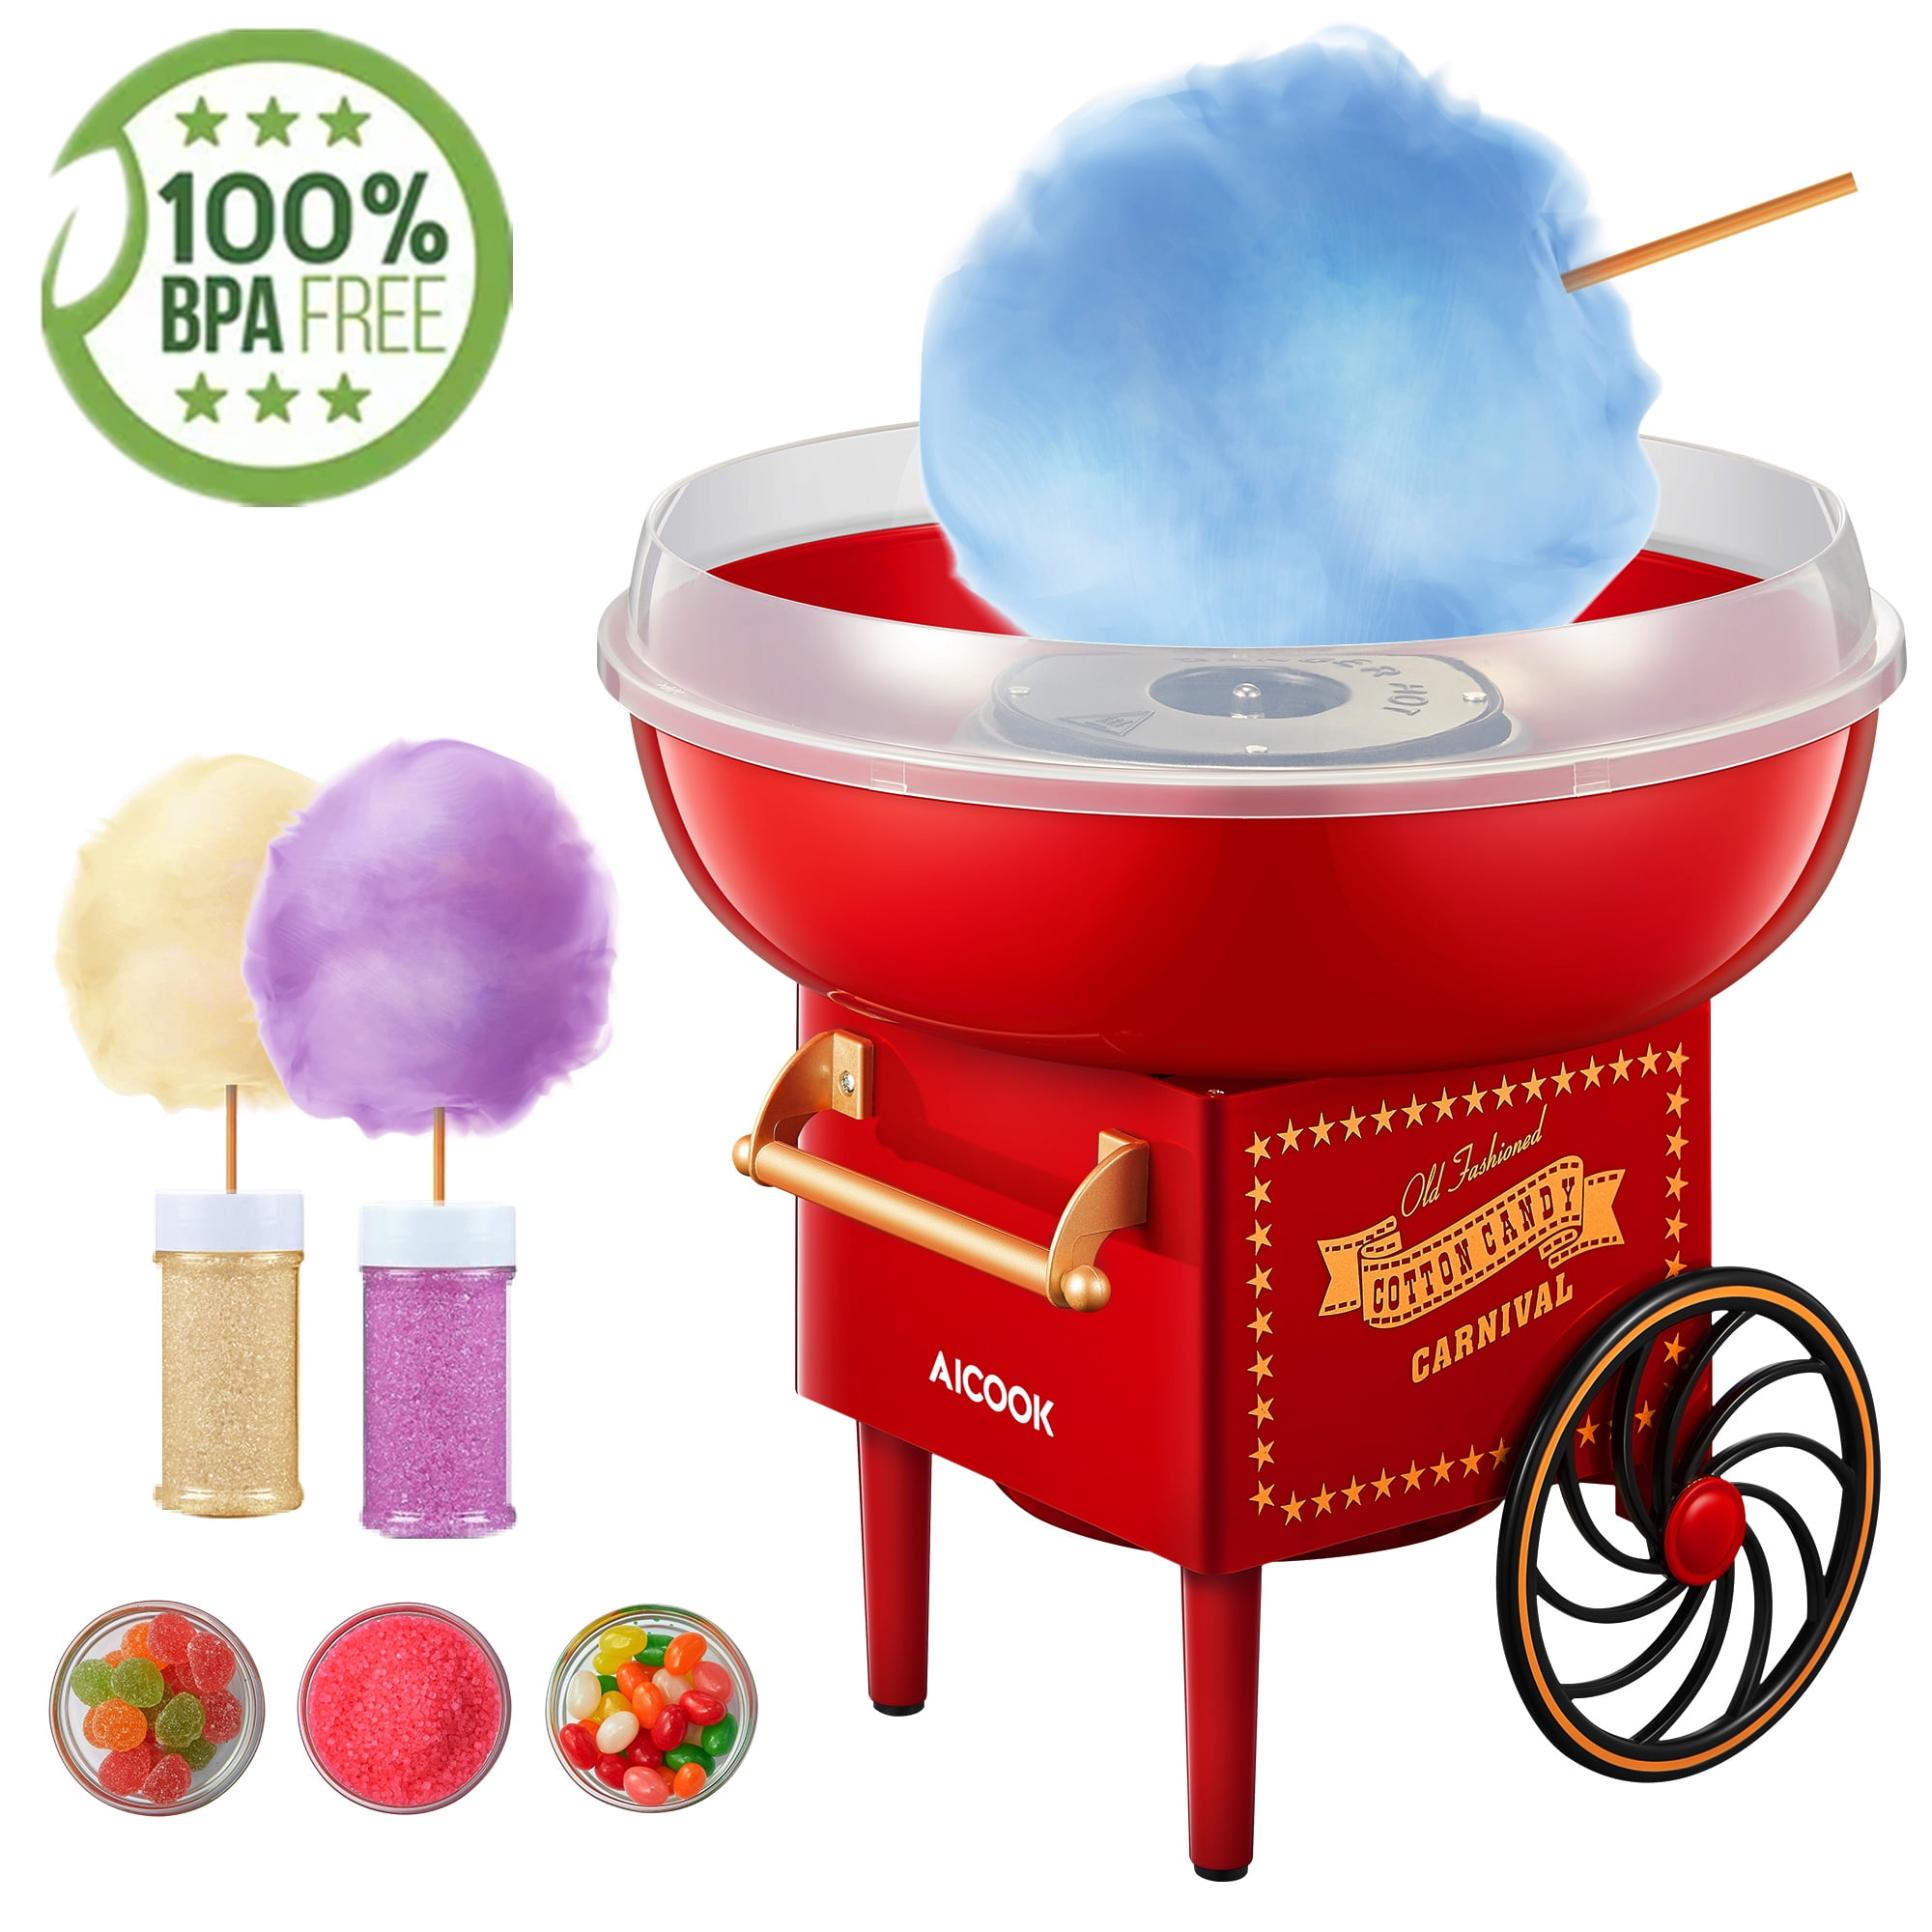 CRA-Z-ART Cookin Cotton Candy Maker Machine for sale online 